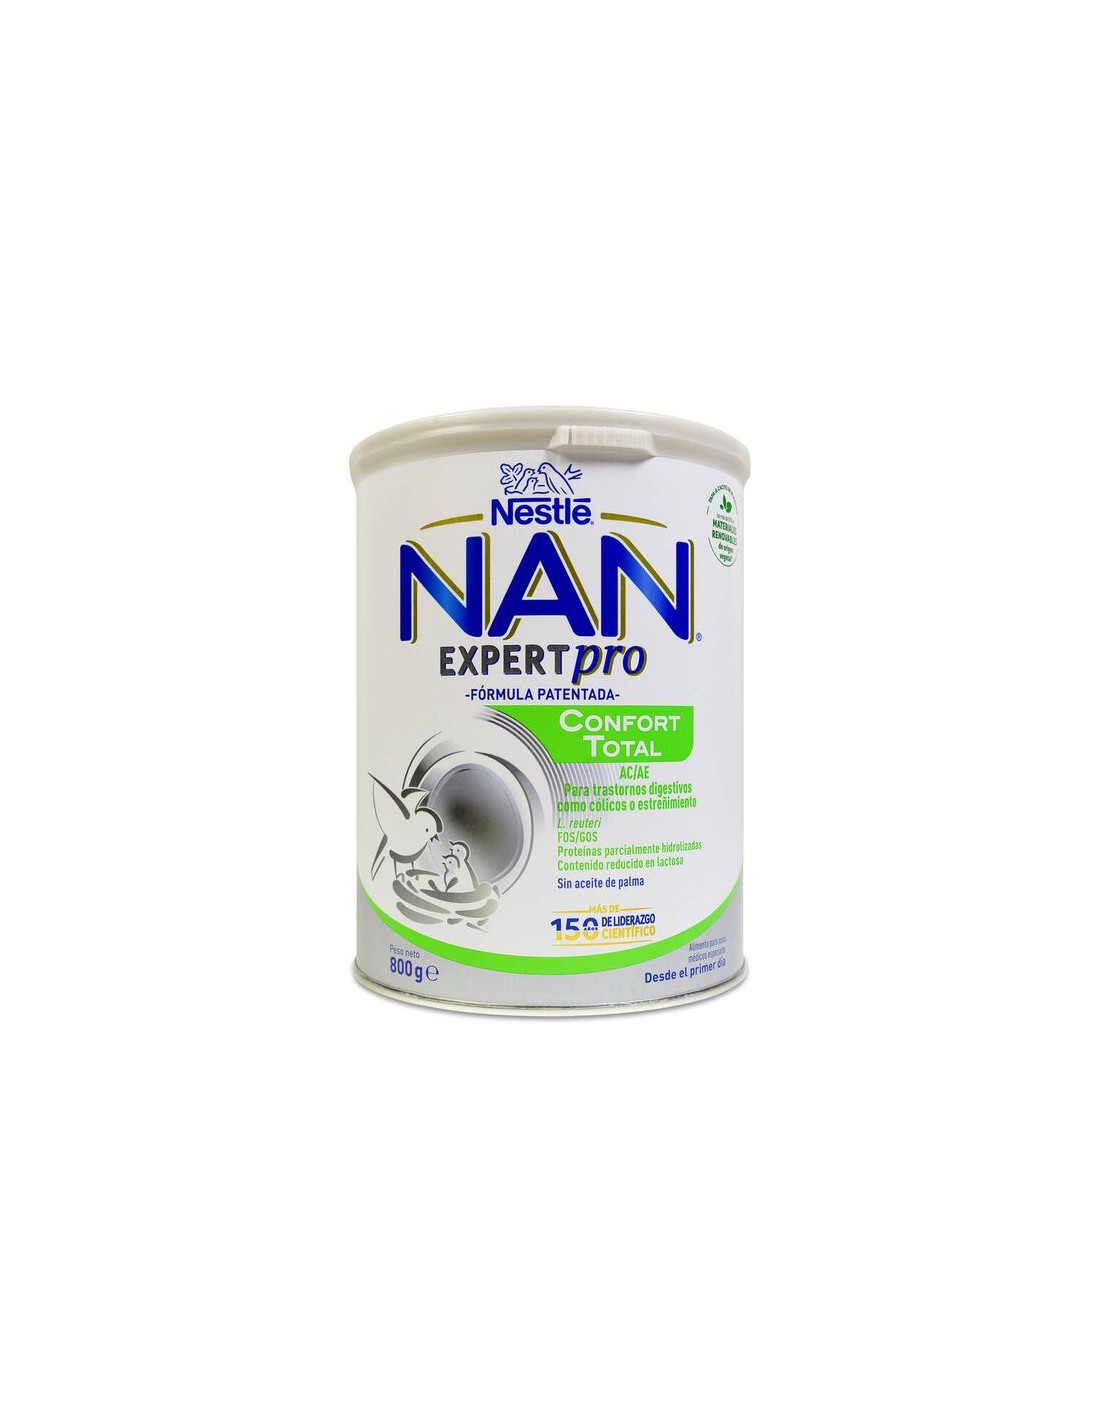 Nan Confort Total 1 Envase 800 G